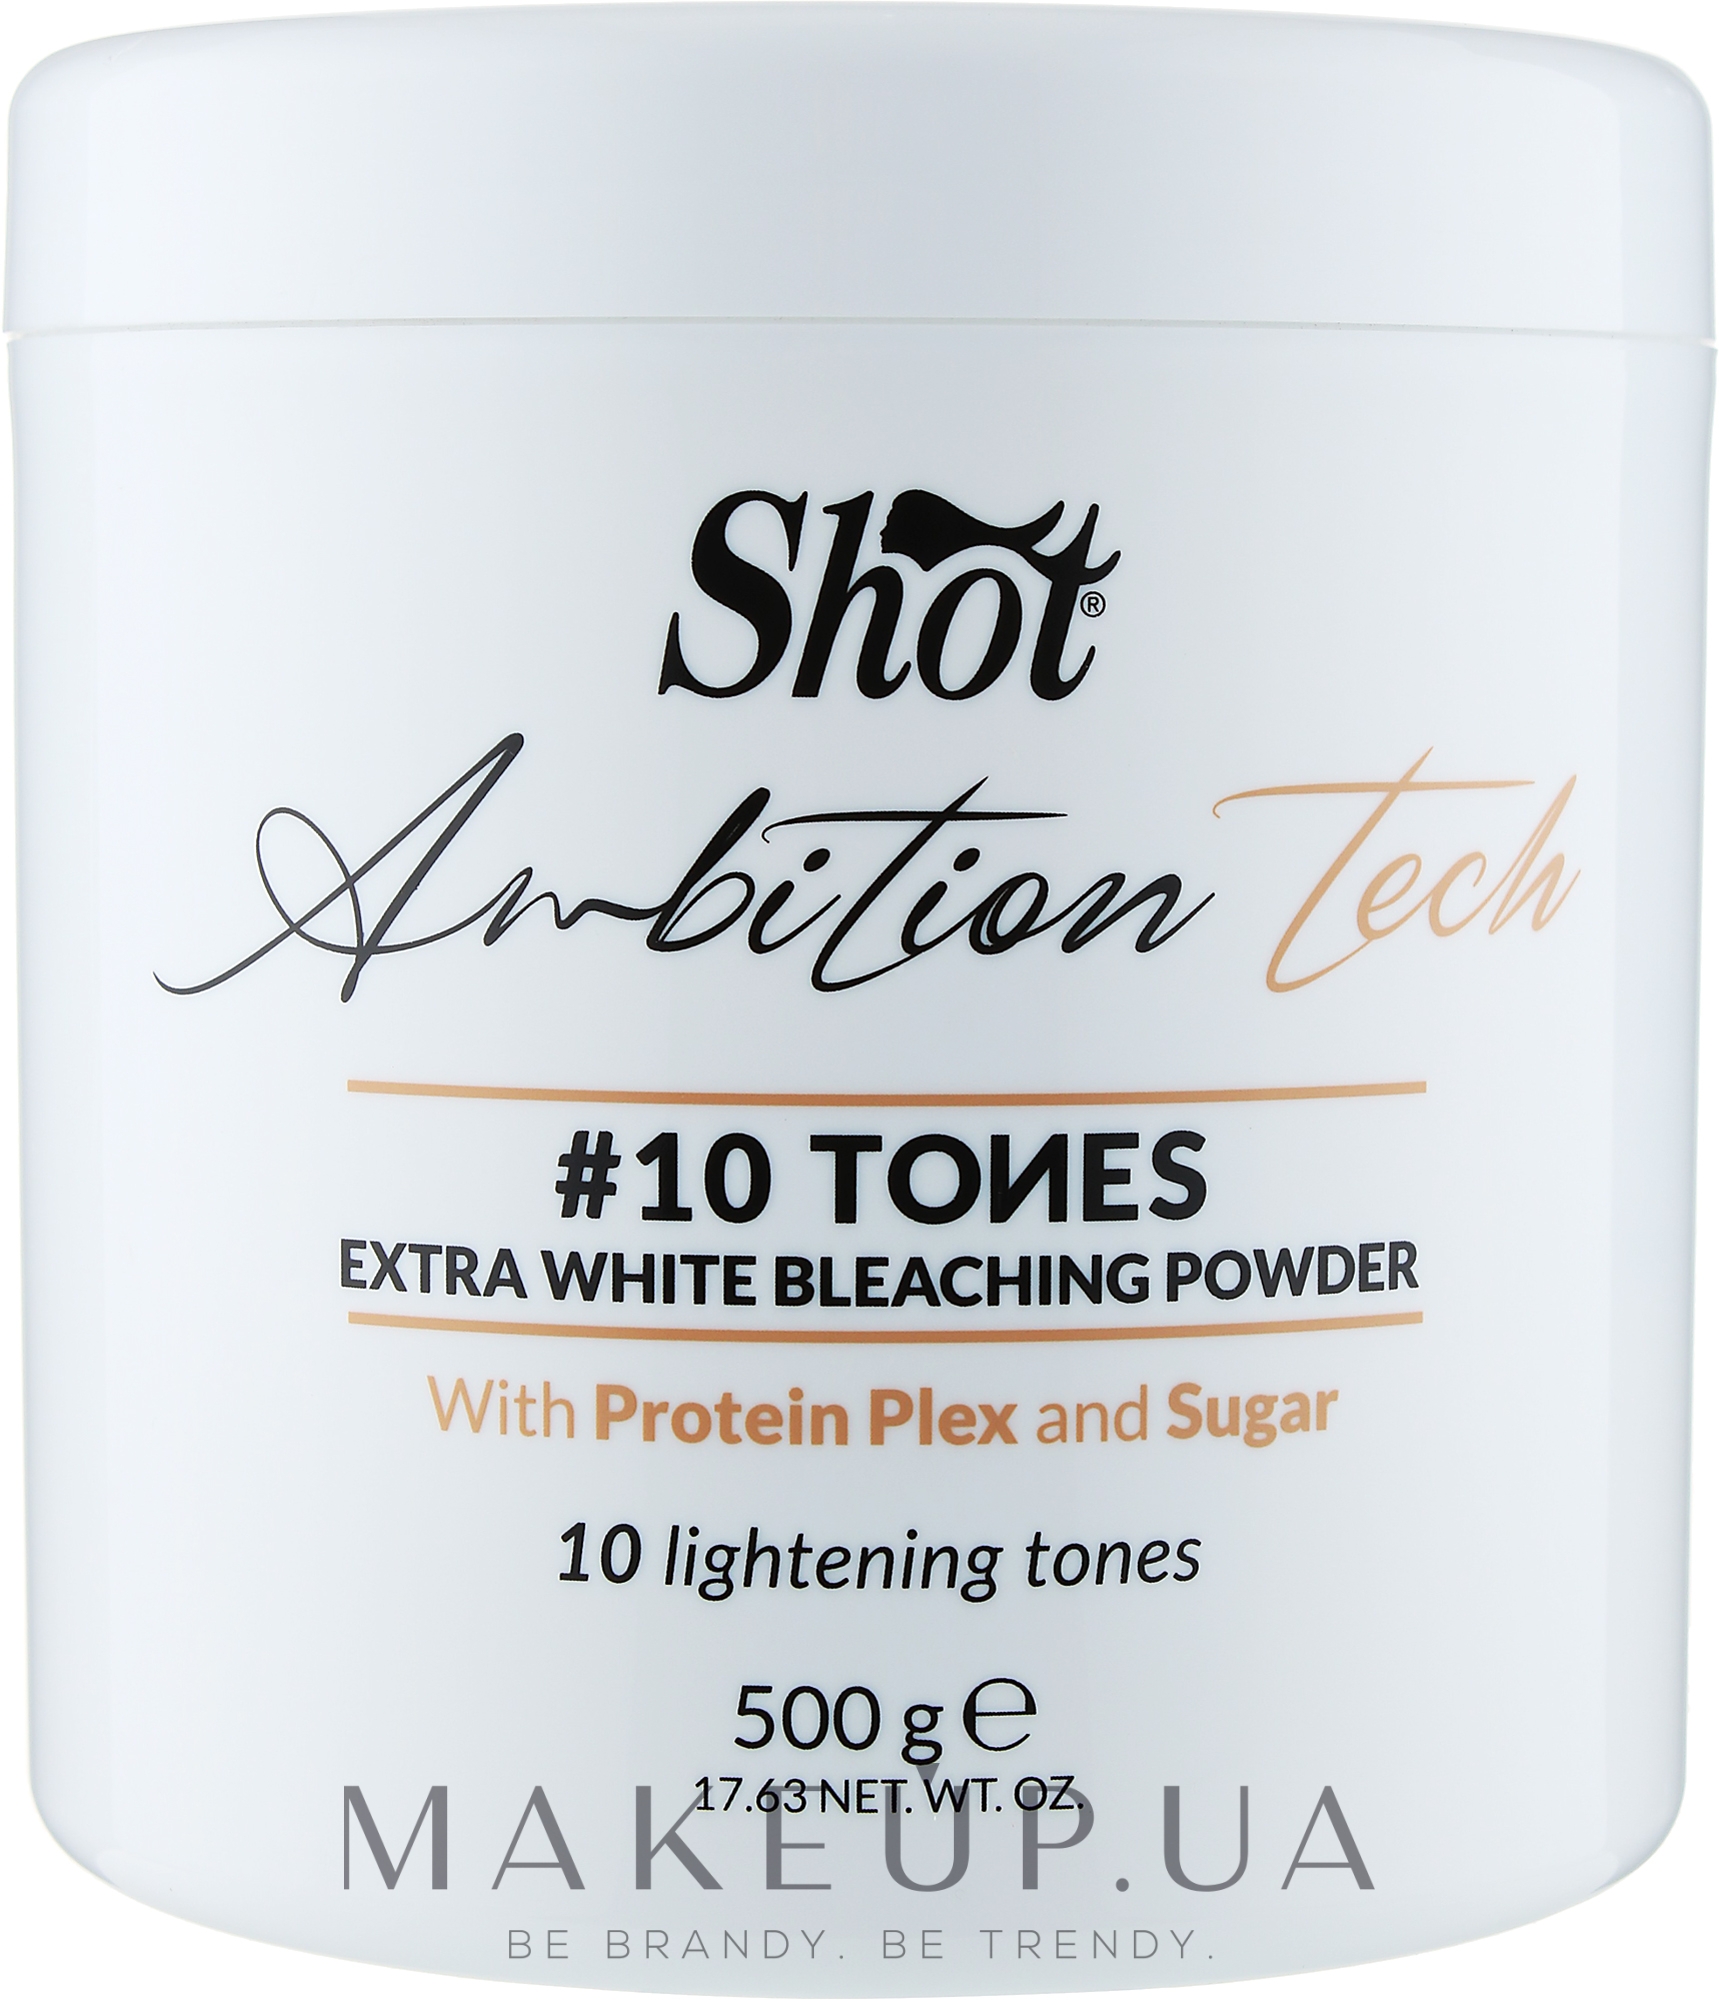 Екстрабілий знебарвлювальний порошок для волосся, 10 тонів - Shot Ambition Tech 10 Tones Extra White Bleaching Powder — фото 500g